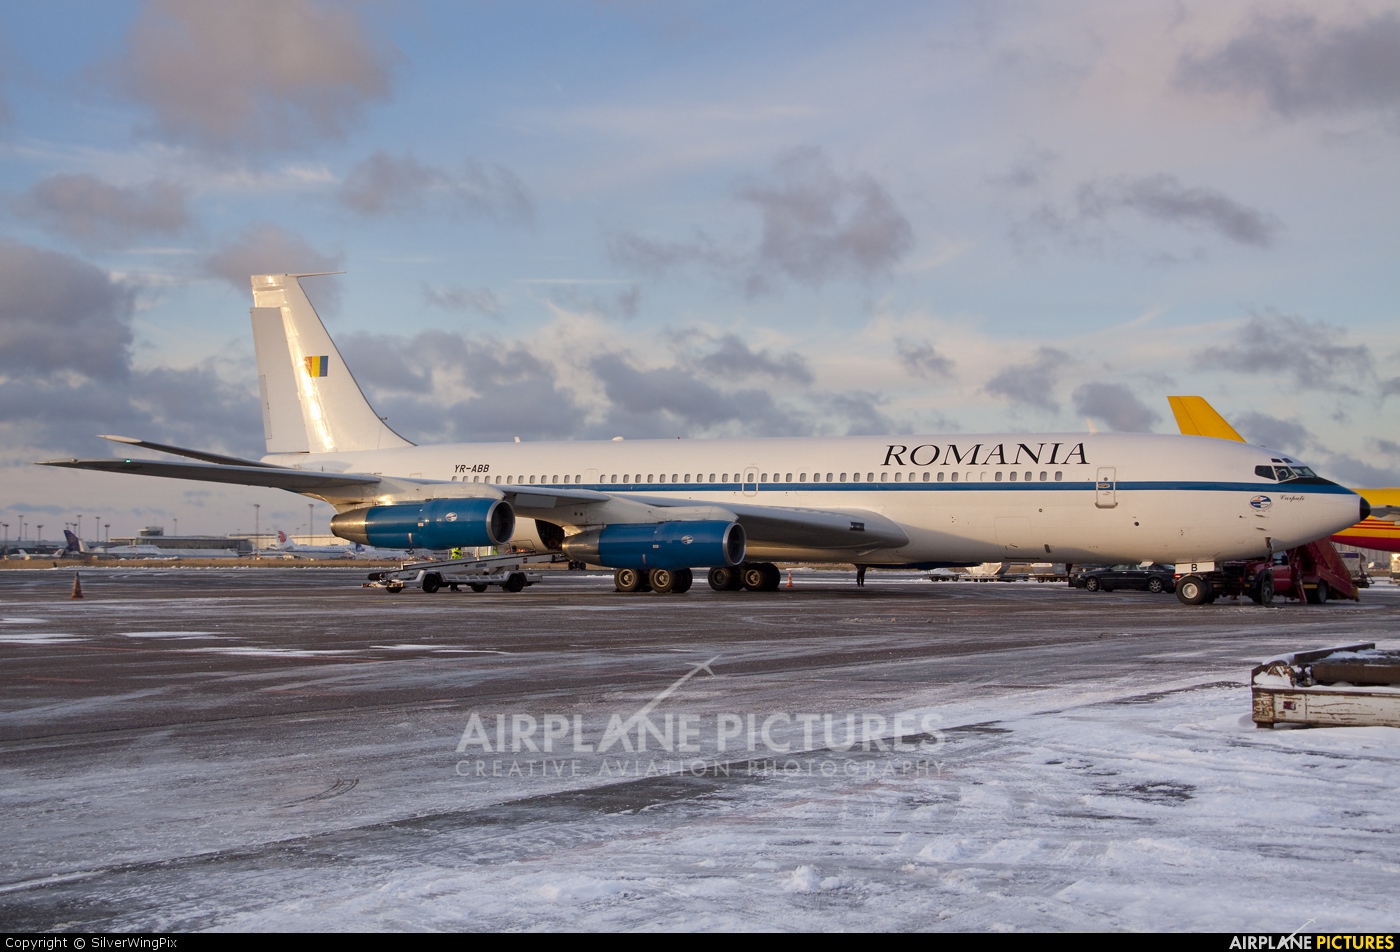 Romania - Government (Romavia) YR-ABB aircraft at Undisclosed location